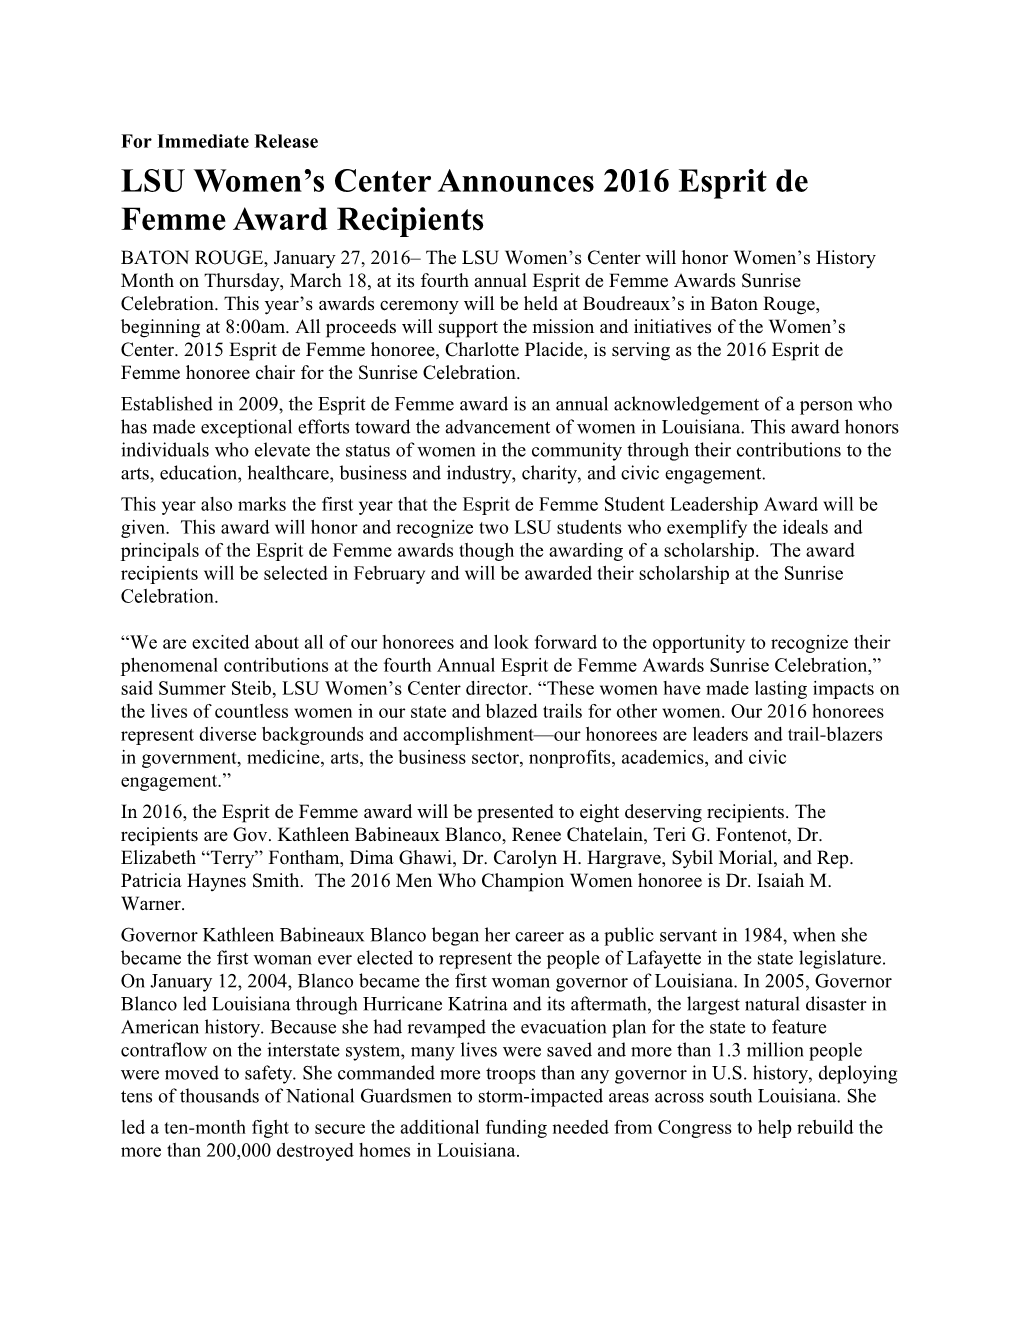 LSU Women S Center Announces 2016 Esprit De Femme Award Recipients